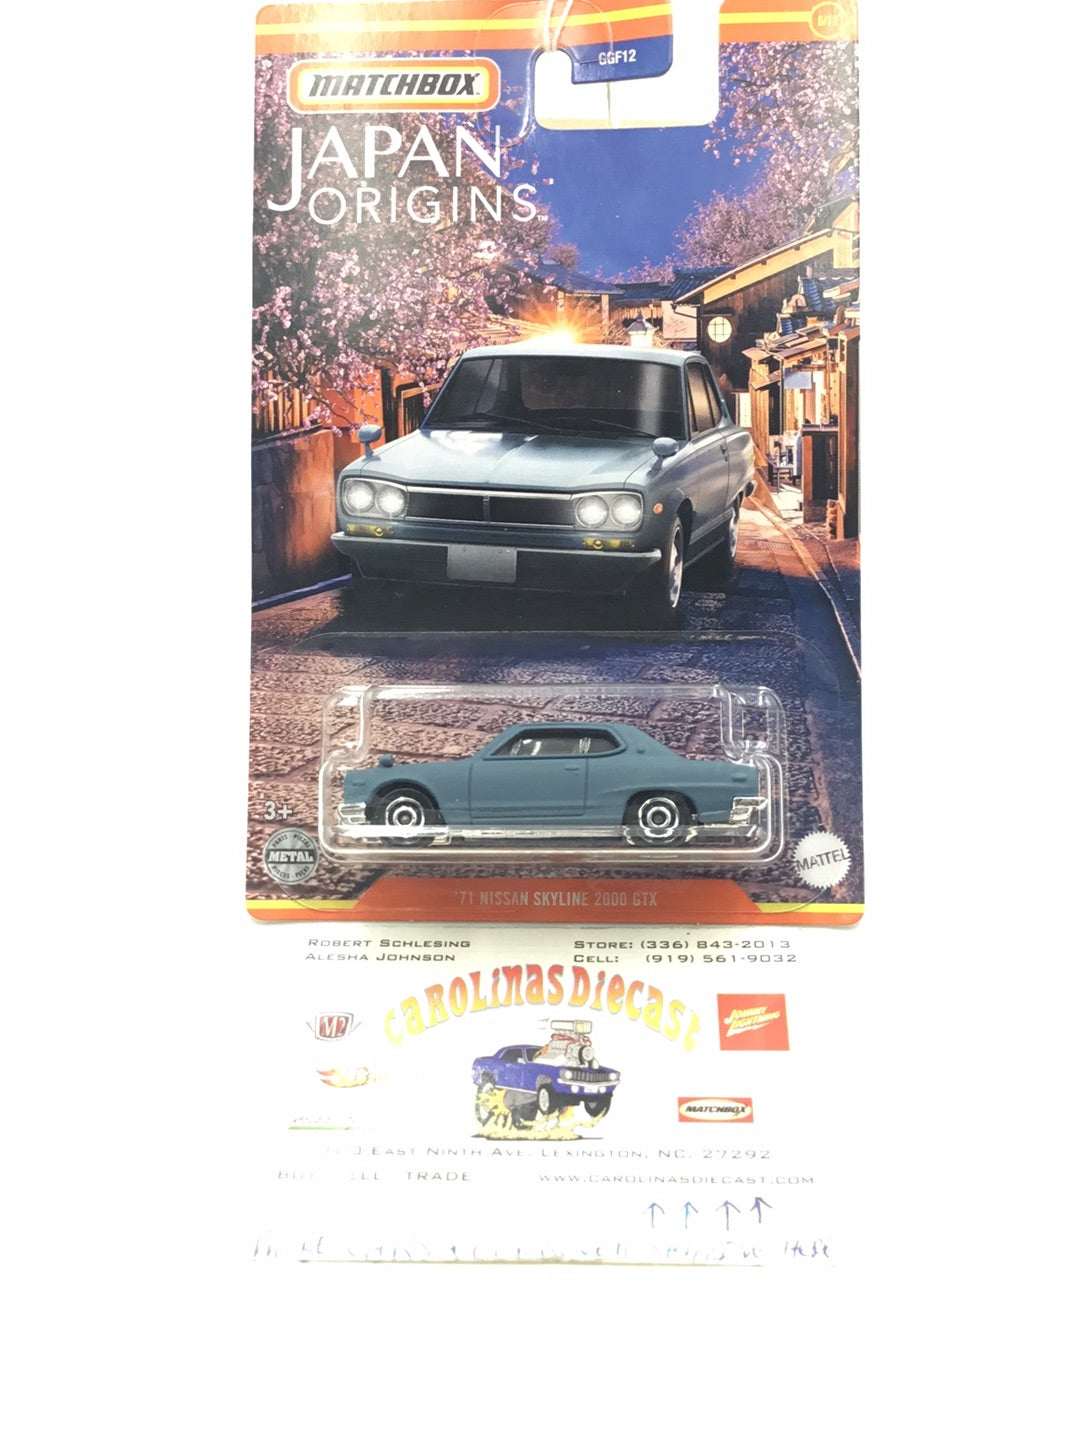 2021 Matchbox Japan Origins #6  71 Nissan Skyline 2000 GTX 161H